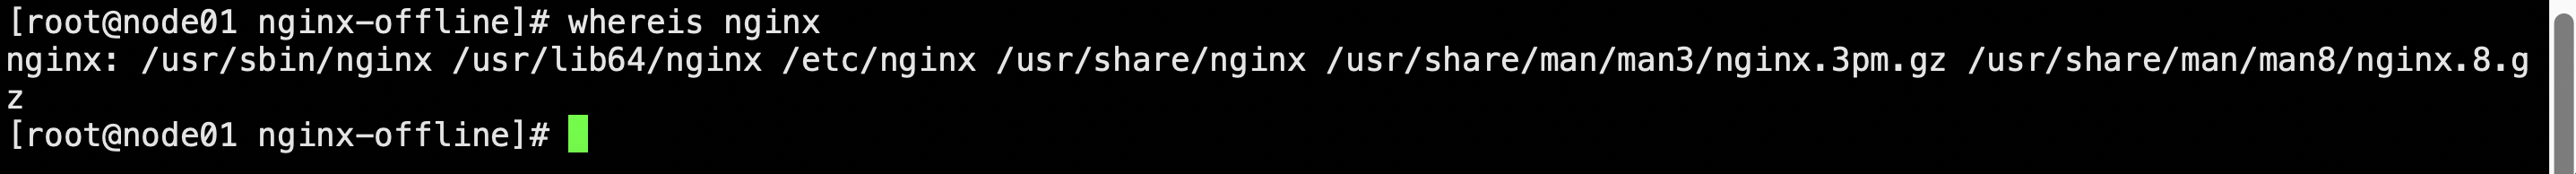 nginx配置反向代理某个url